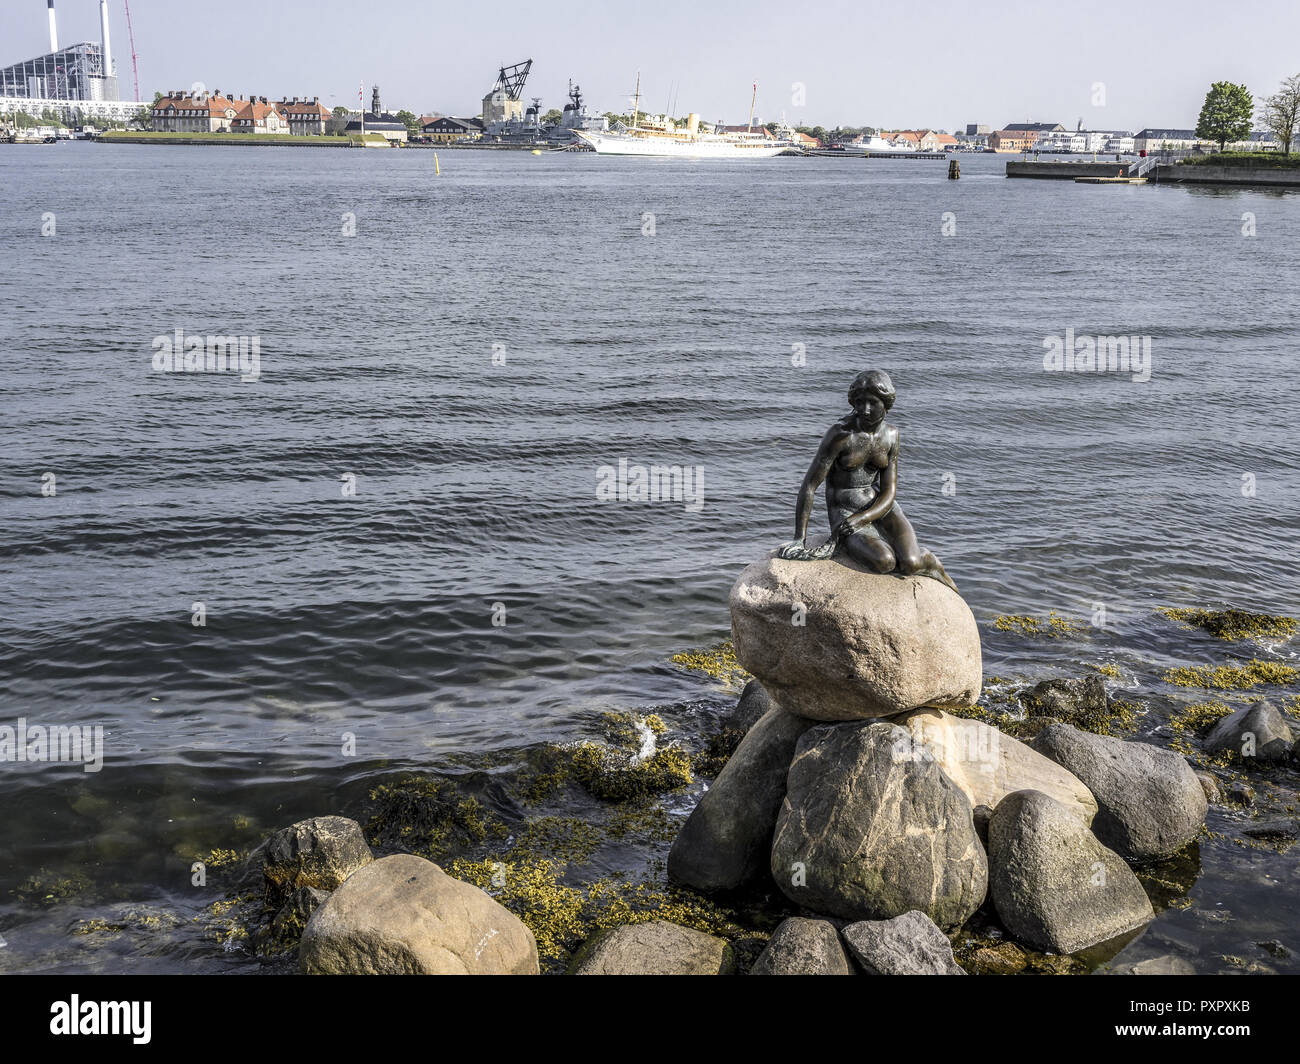 The Mermaid, sculpture in Copenhagen, Denmark Stock Photo - Alamy